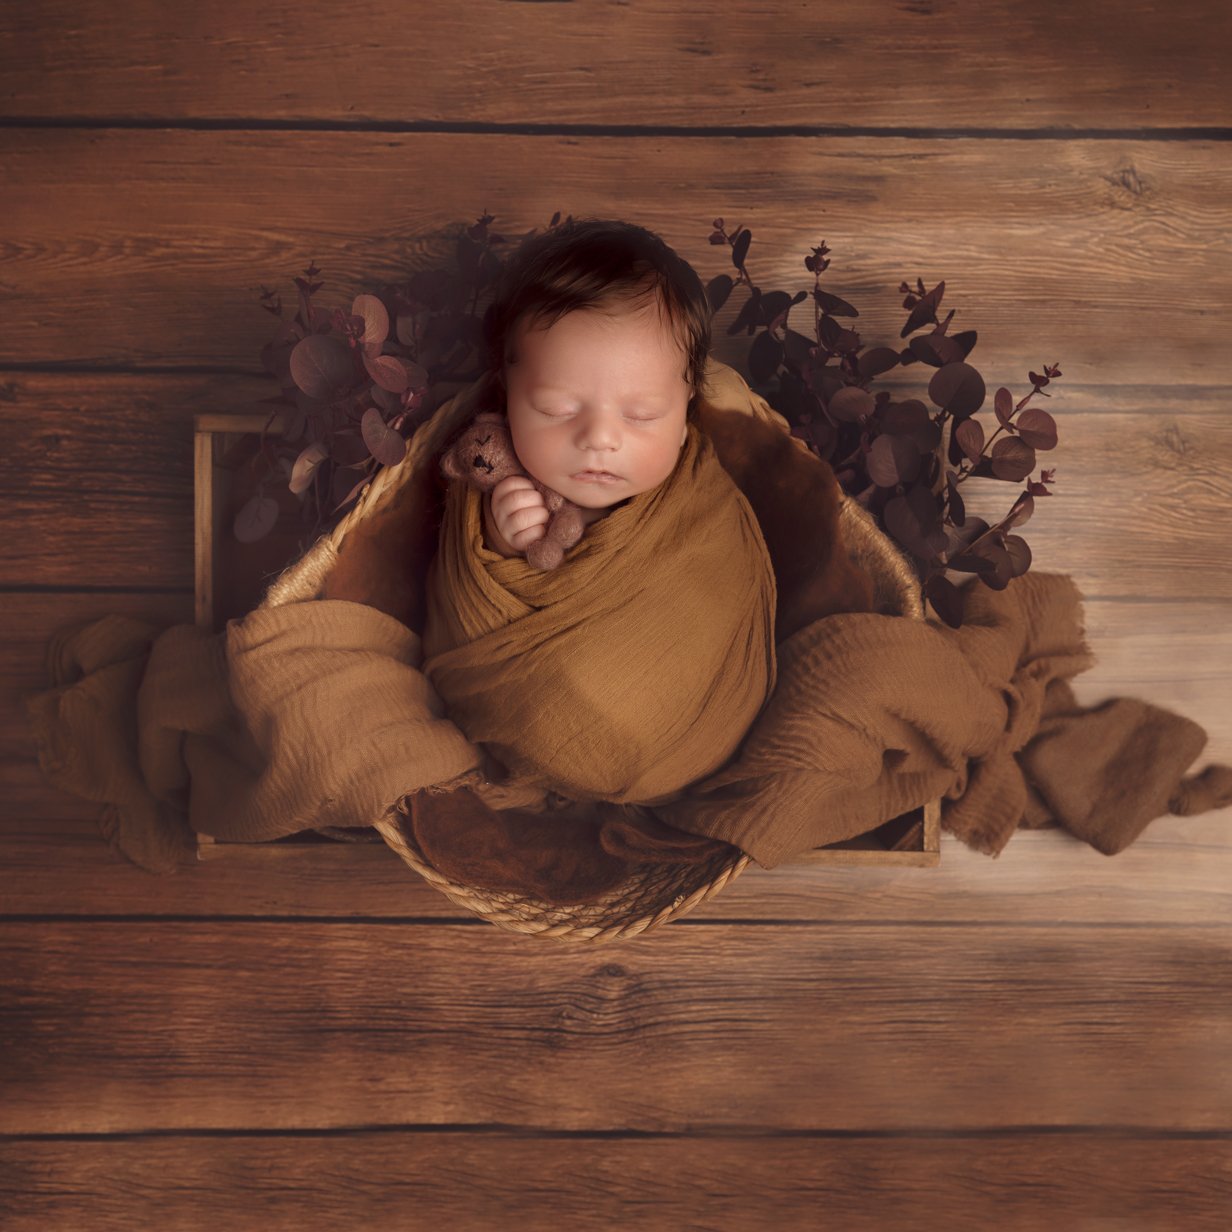 Lora Wild Photographe Strasbourg Alsace bébé naissance newborn baby